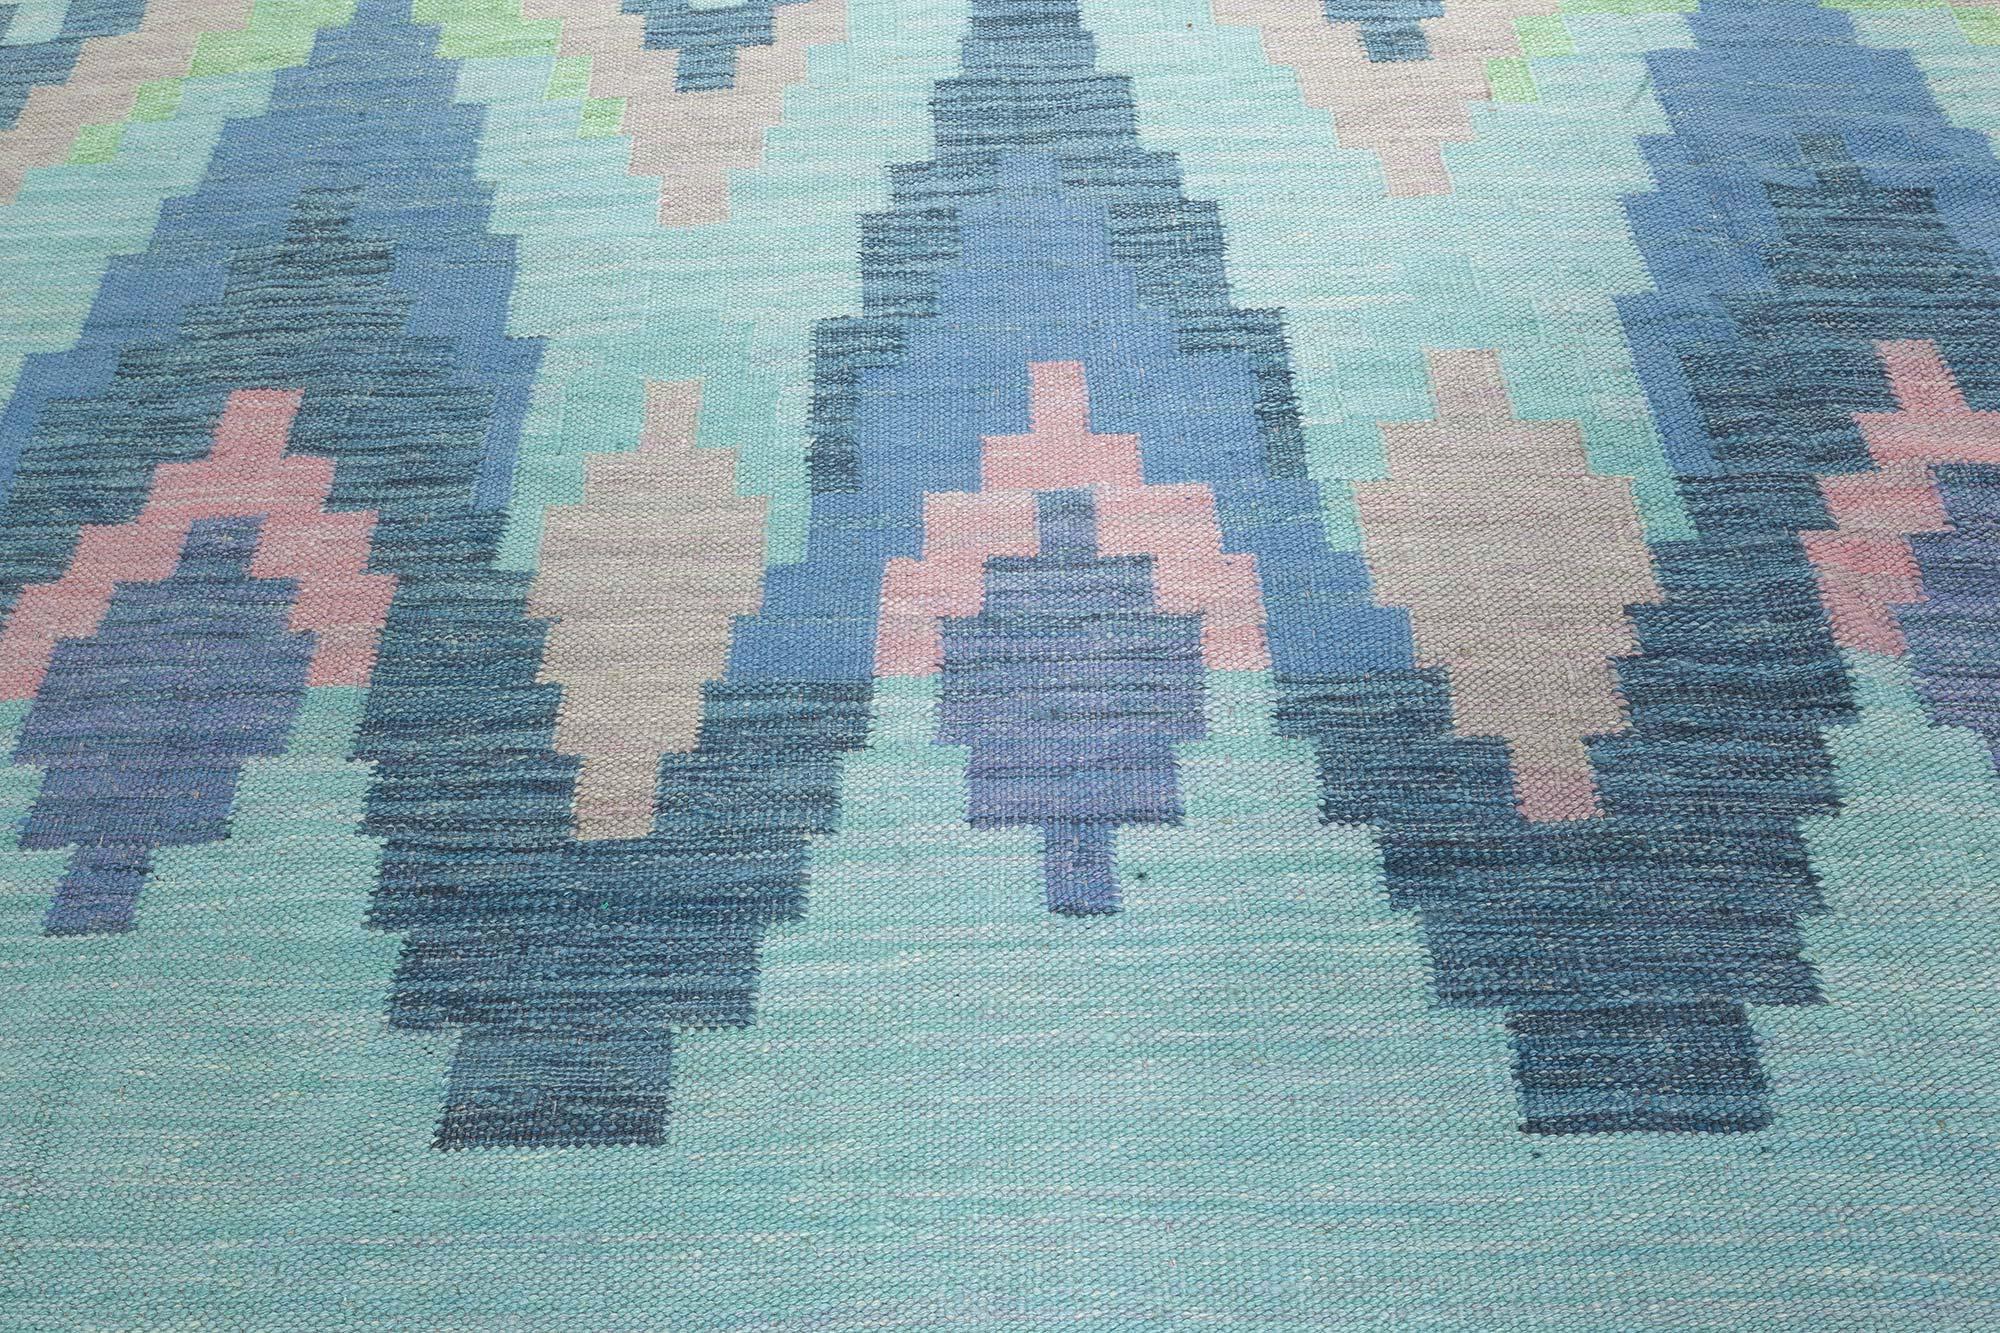 Modern Swedish inspired flat weave rug by Doris Leslie Blau.
Size: 11'6